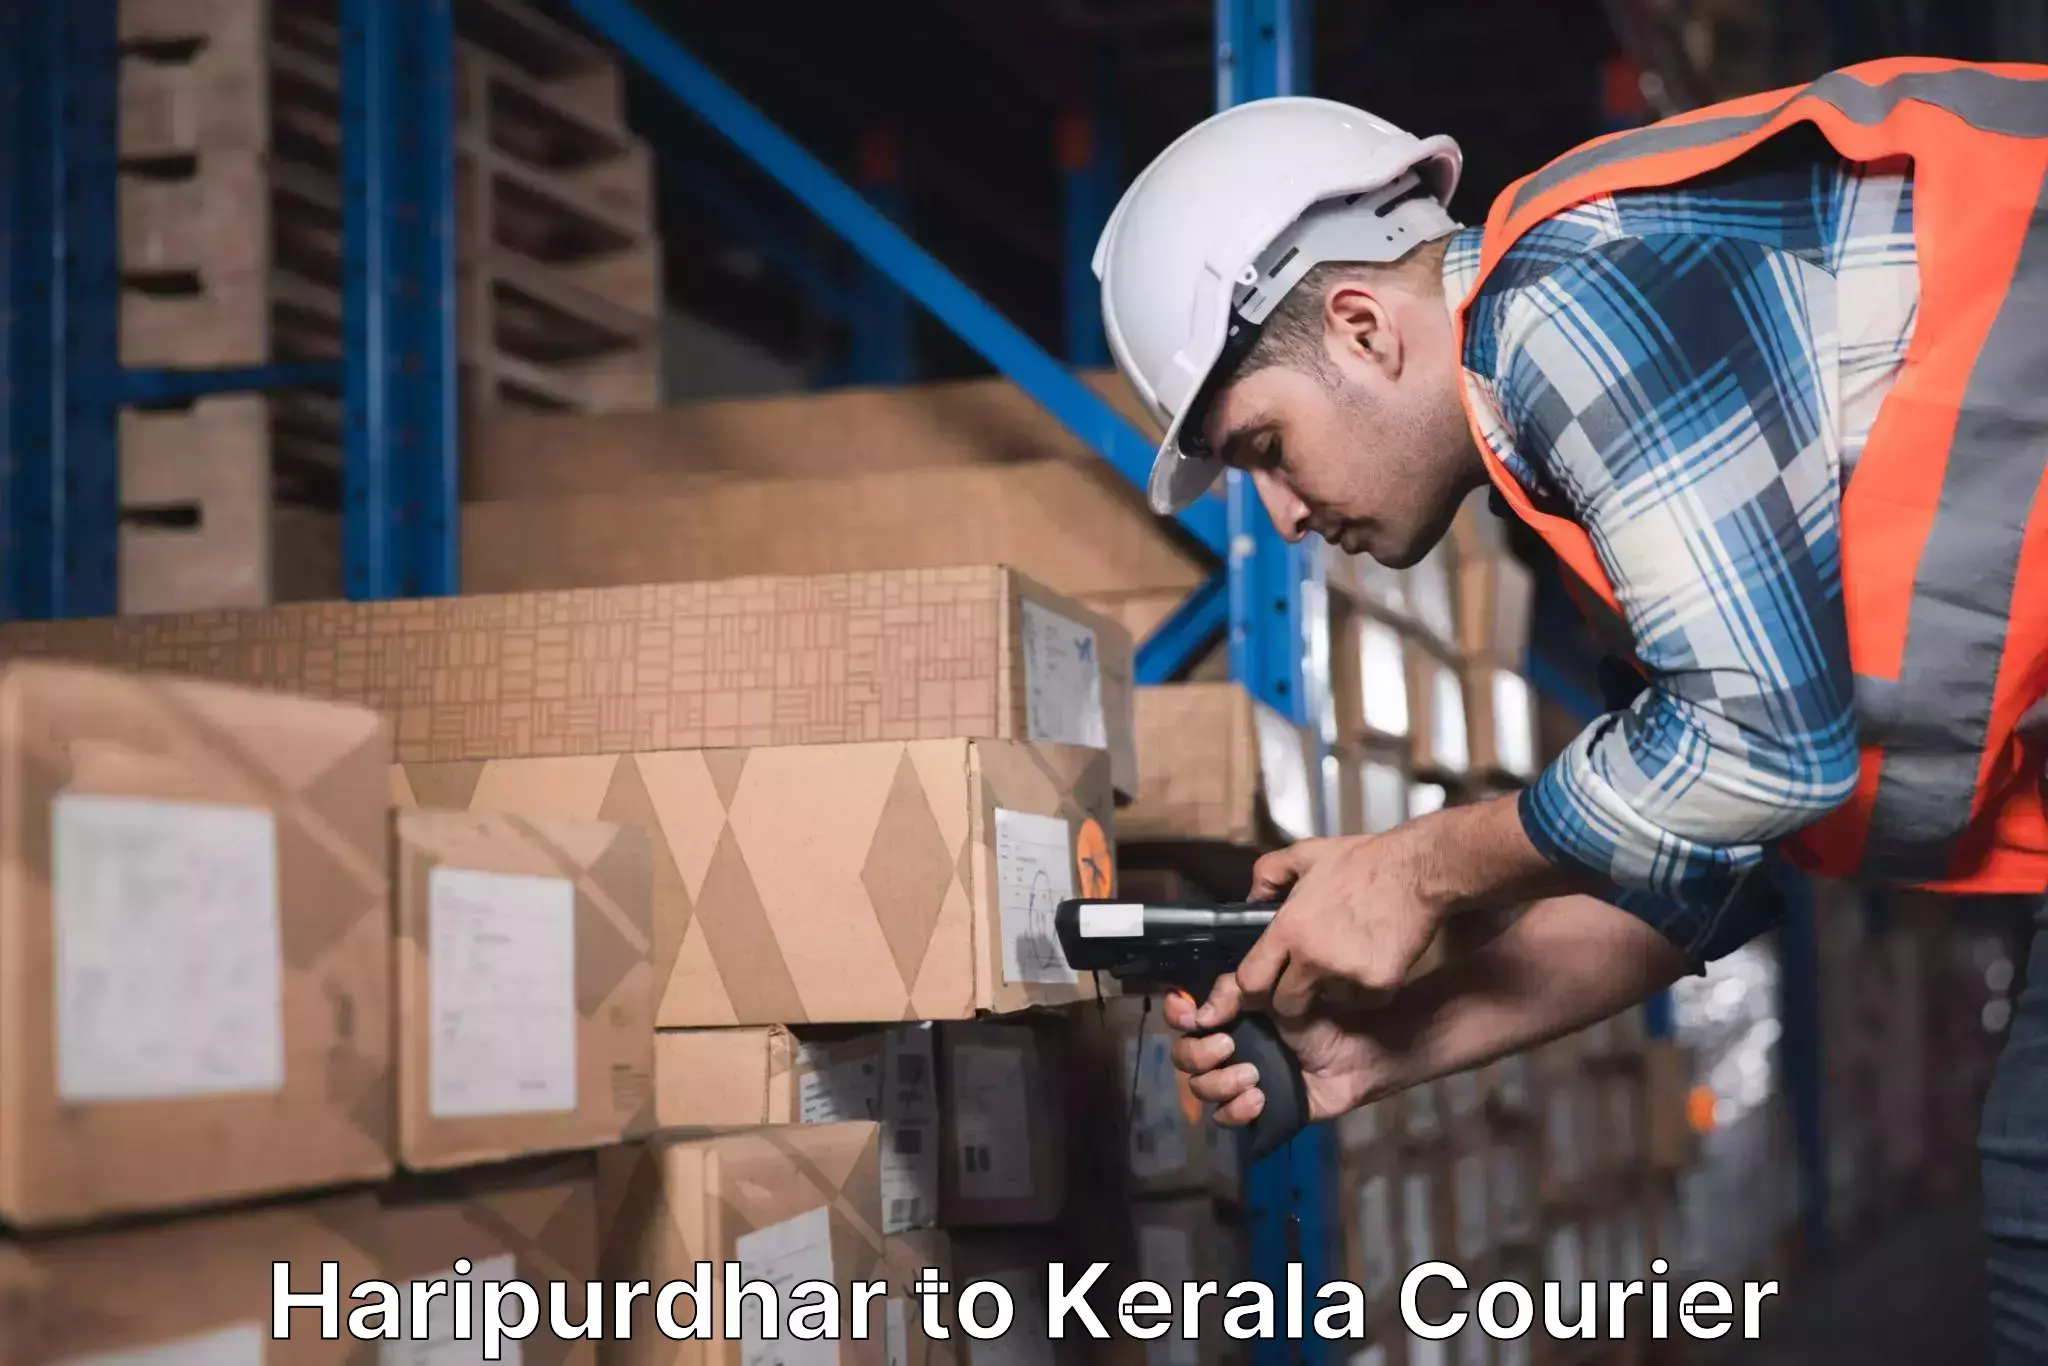 Courier tracking online Haripurdhar to Cochin Port Kochi